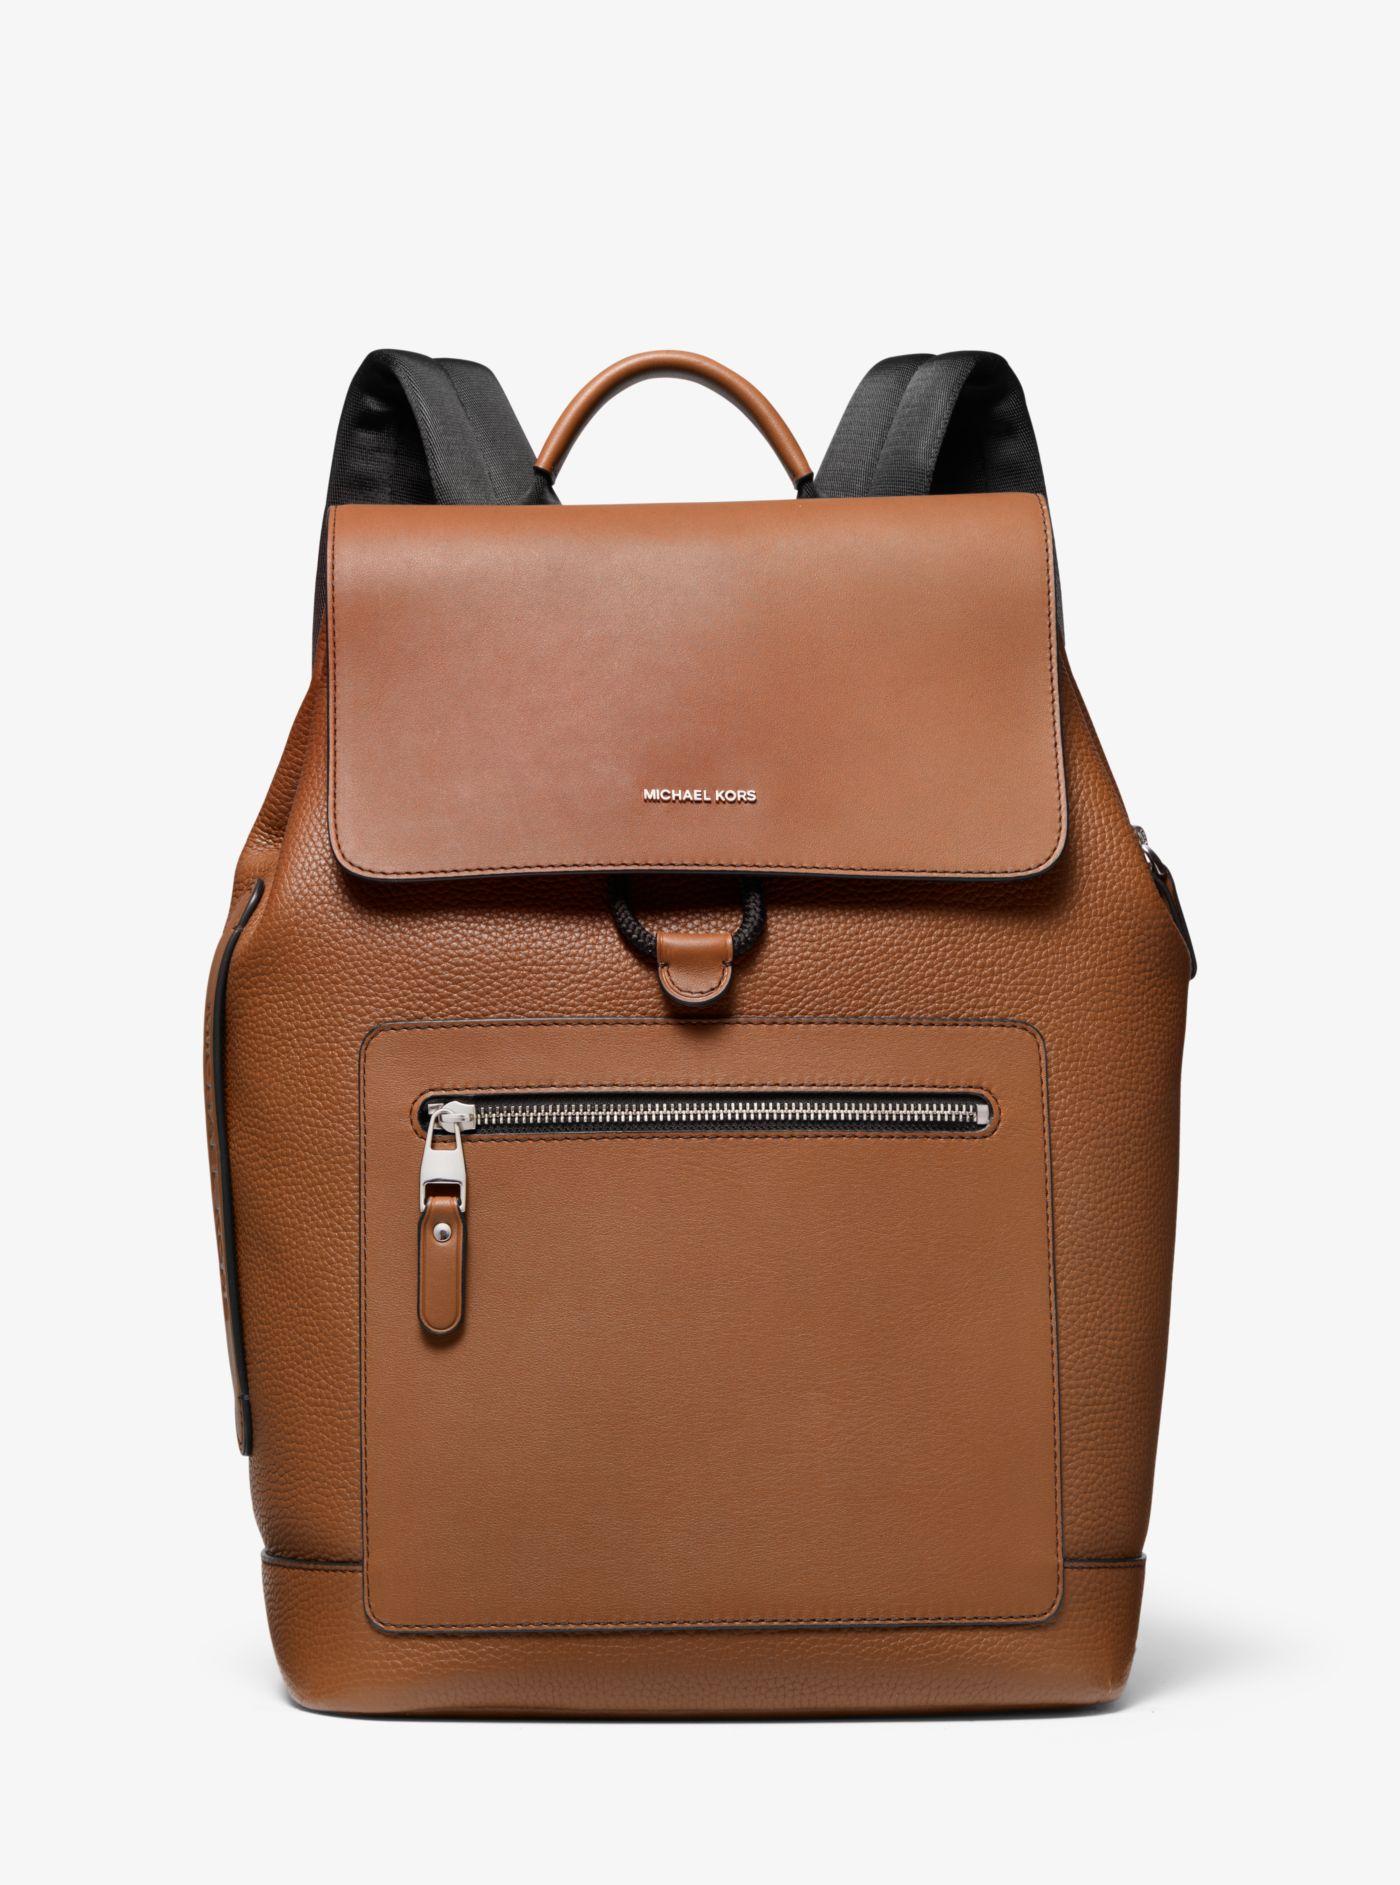 Michael Kors Synthetic Hudson Pebbled Leather Backpack for Men - Lyst